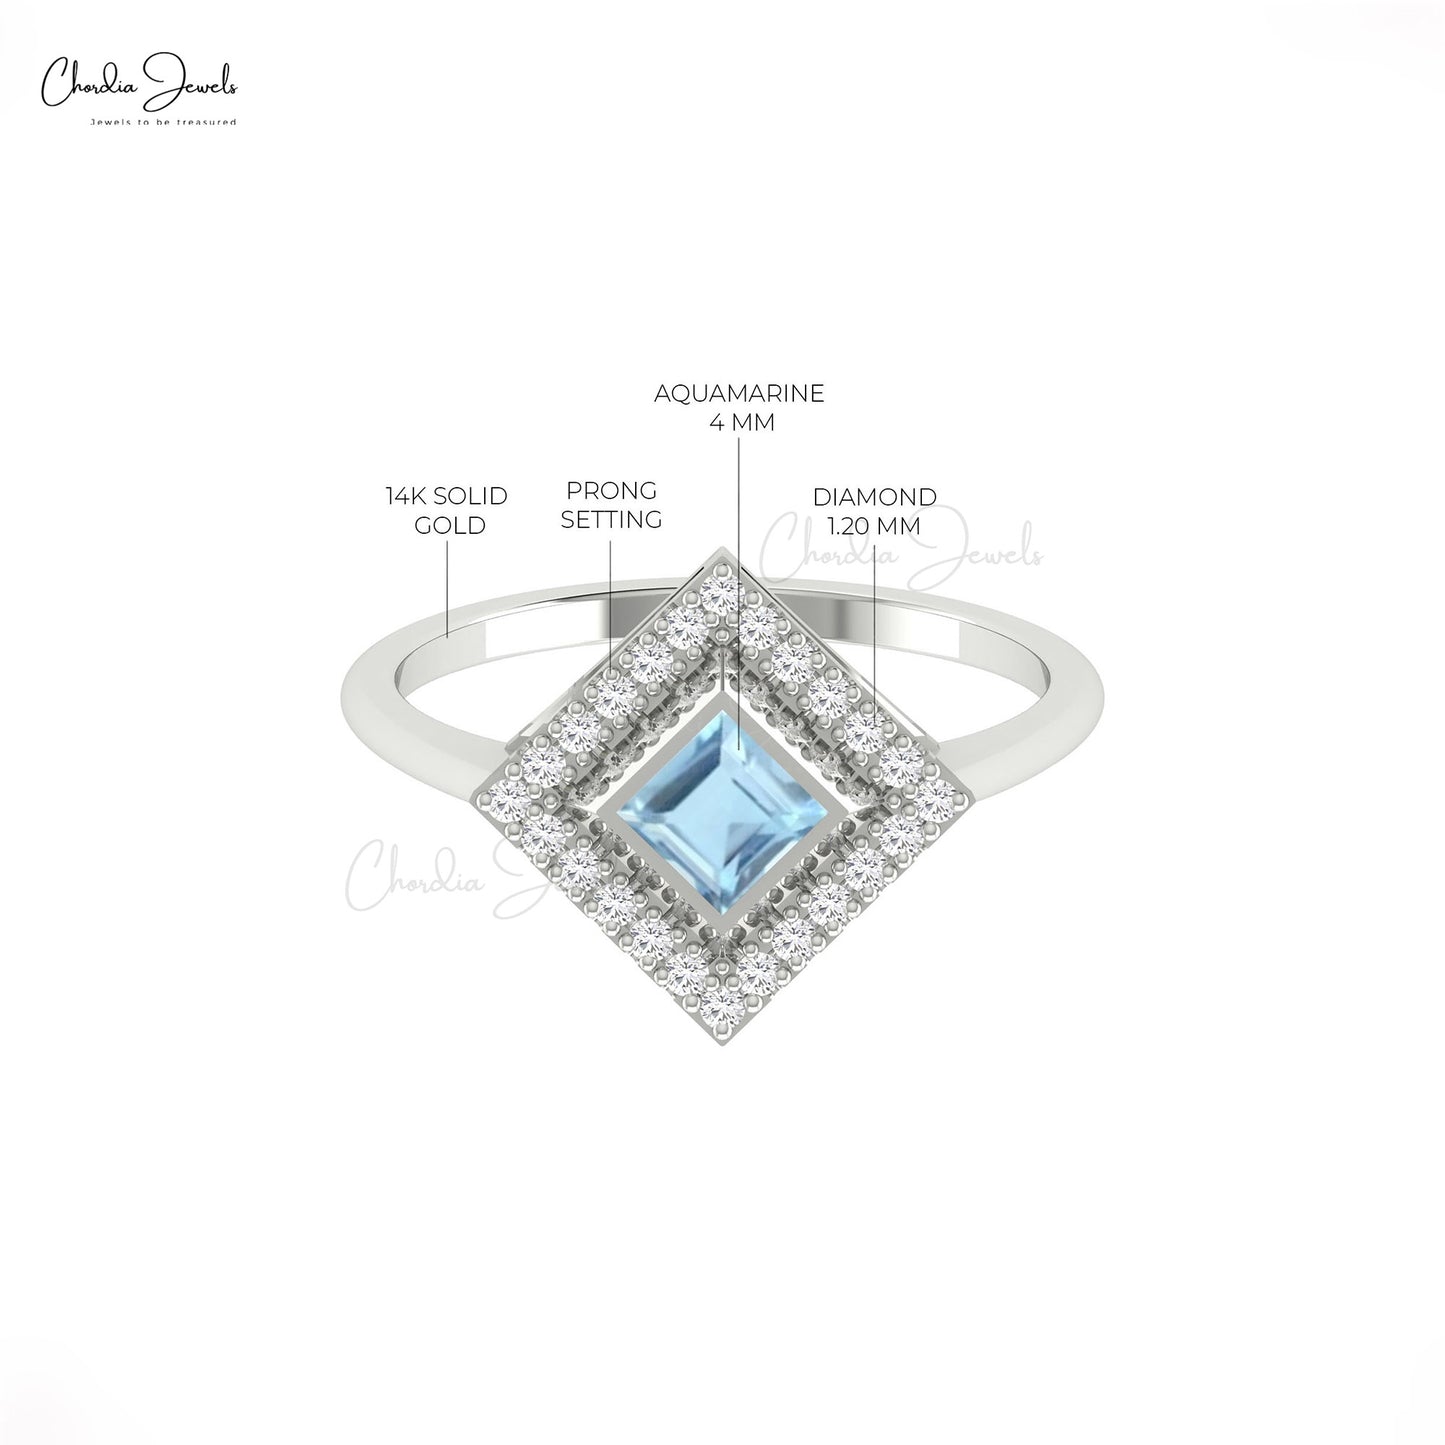 Load image into Gallery viewer, Classic 14k Gold Diamond Halo Engagement Ring Authentic Aquamarine Gemstone Bezel Set Ring
